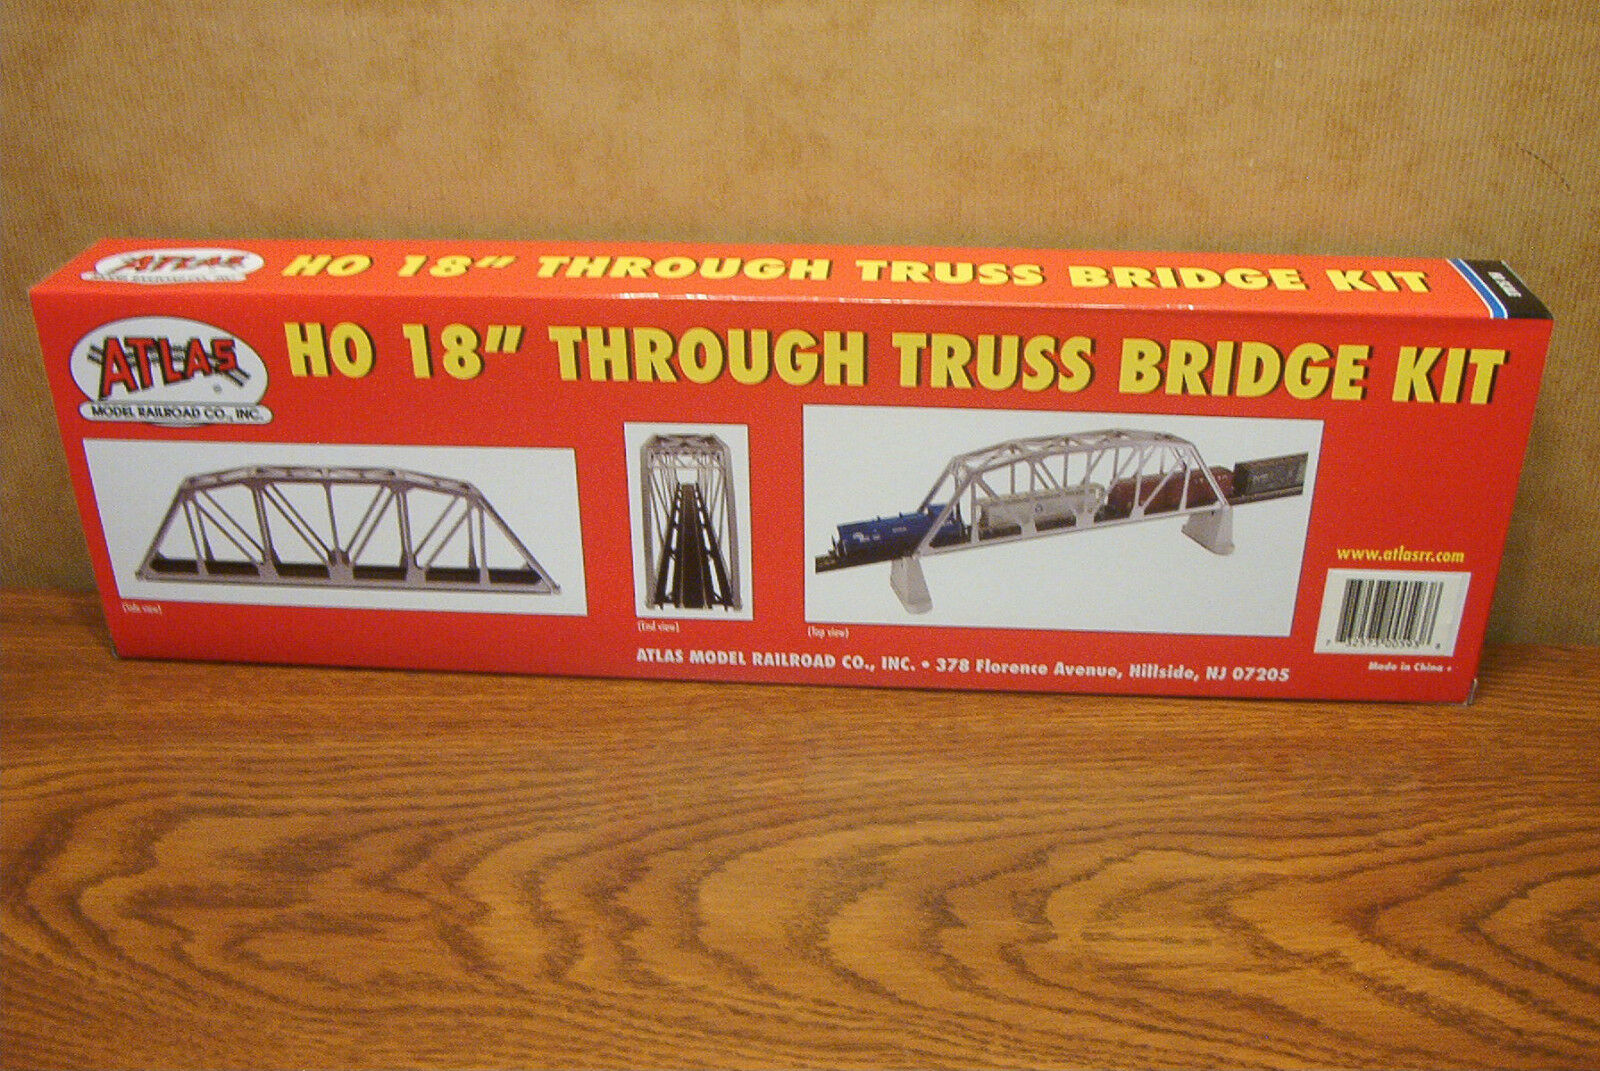 HO-18 THROUGH TRAIN BRIDGE KIT